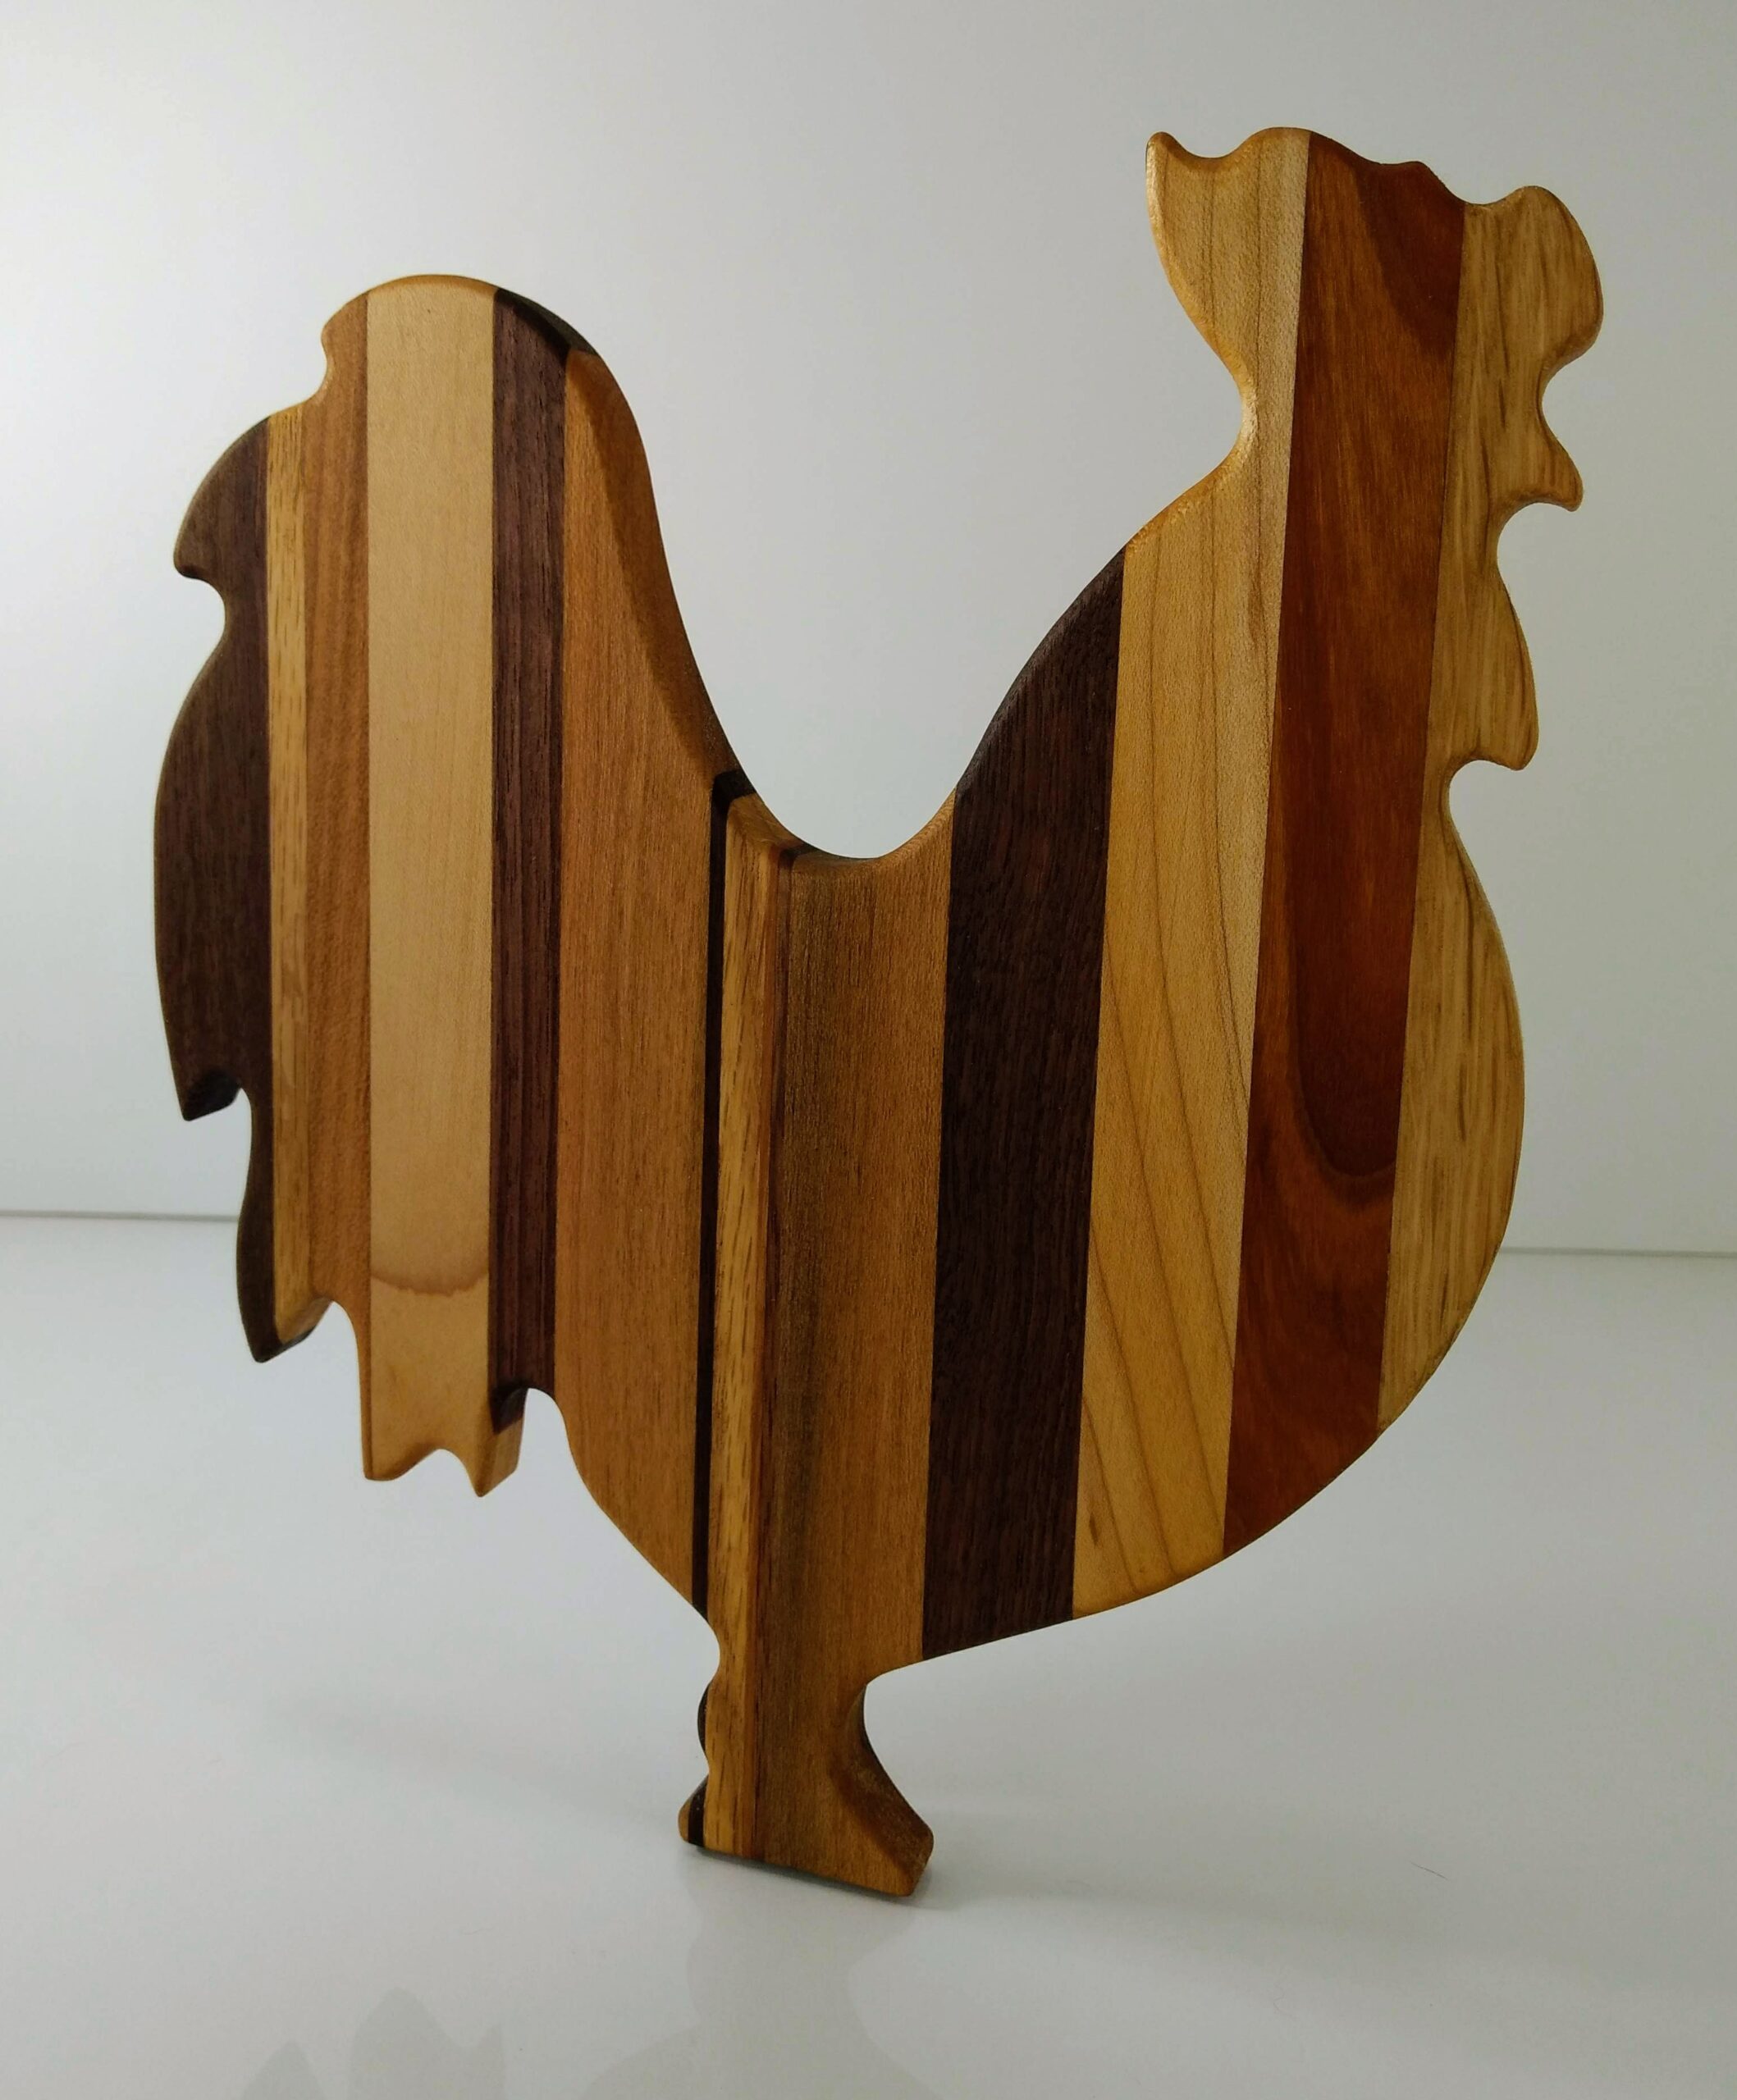 Wooden Chicken Cutting Board/Cheese Board